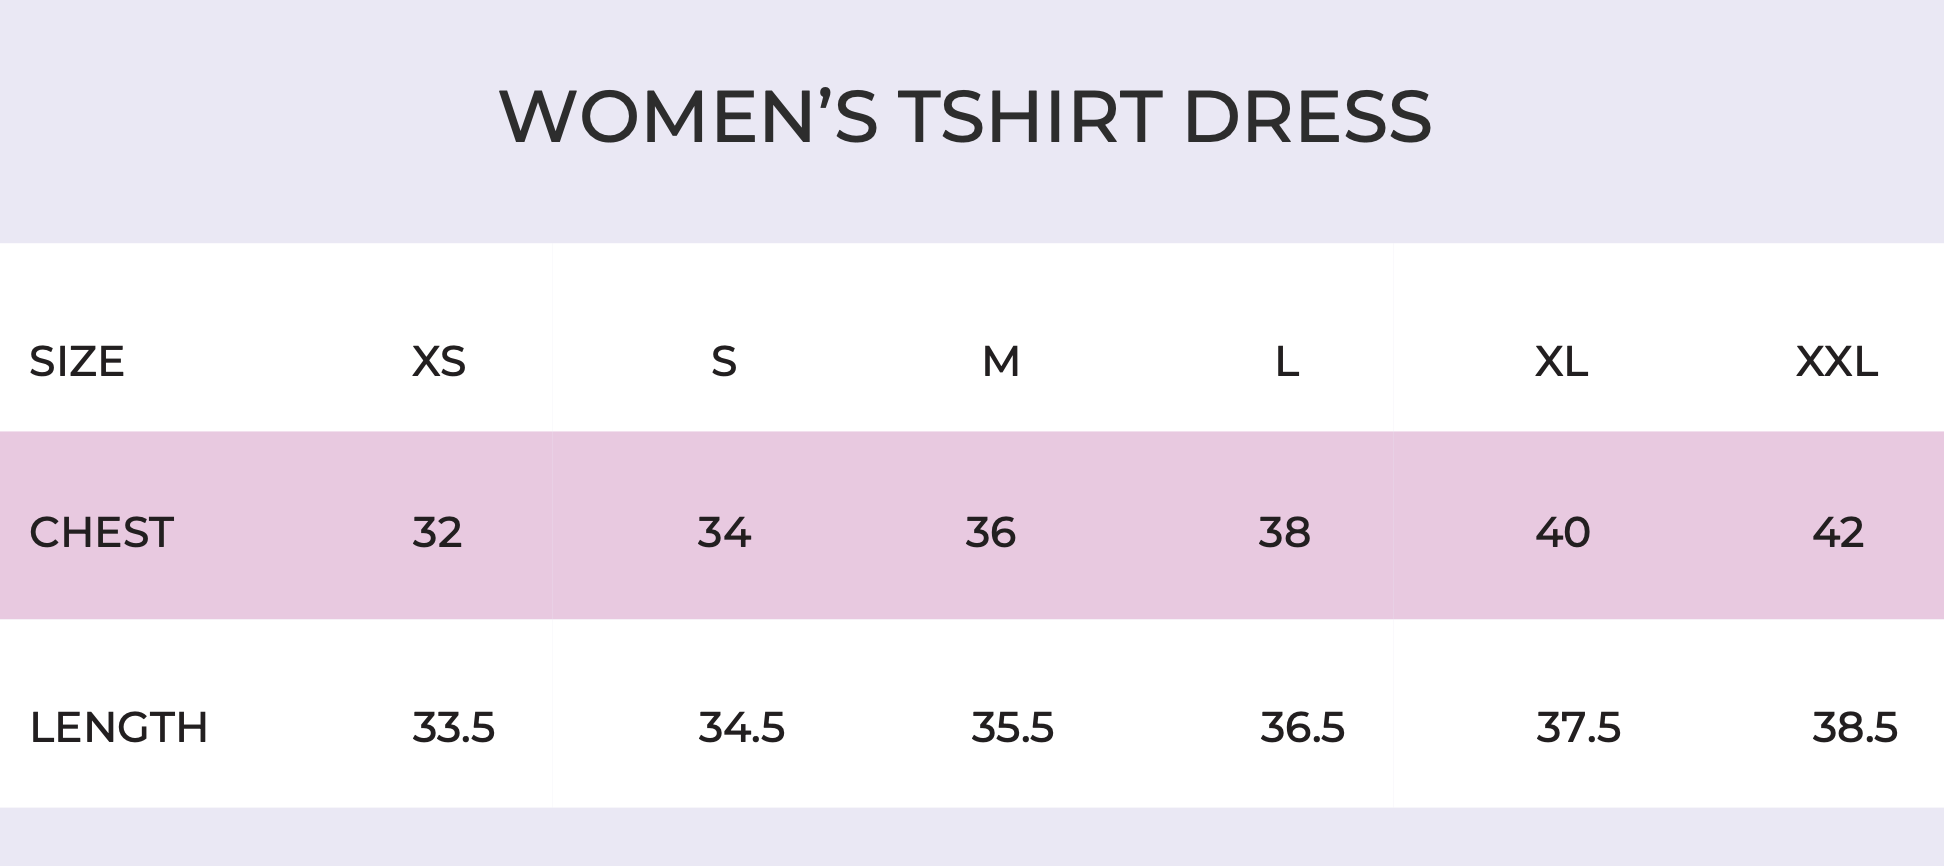 Happiness - Sukhiaatma Designer T-shirt Dress